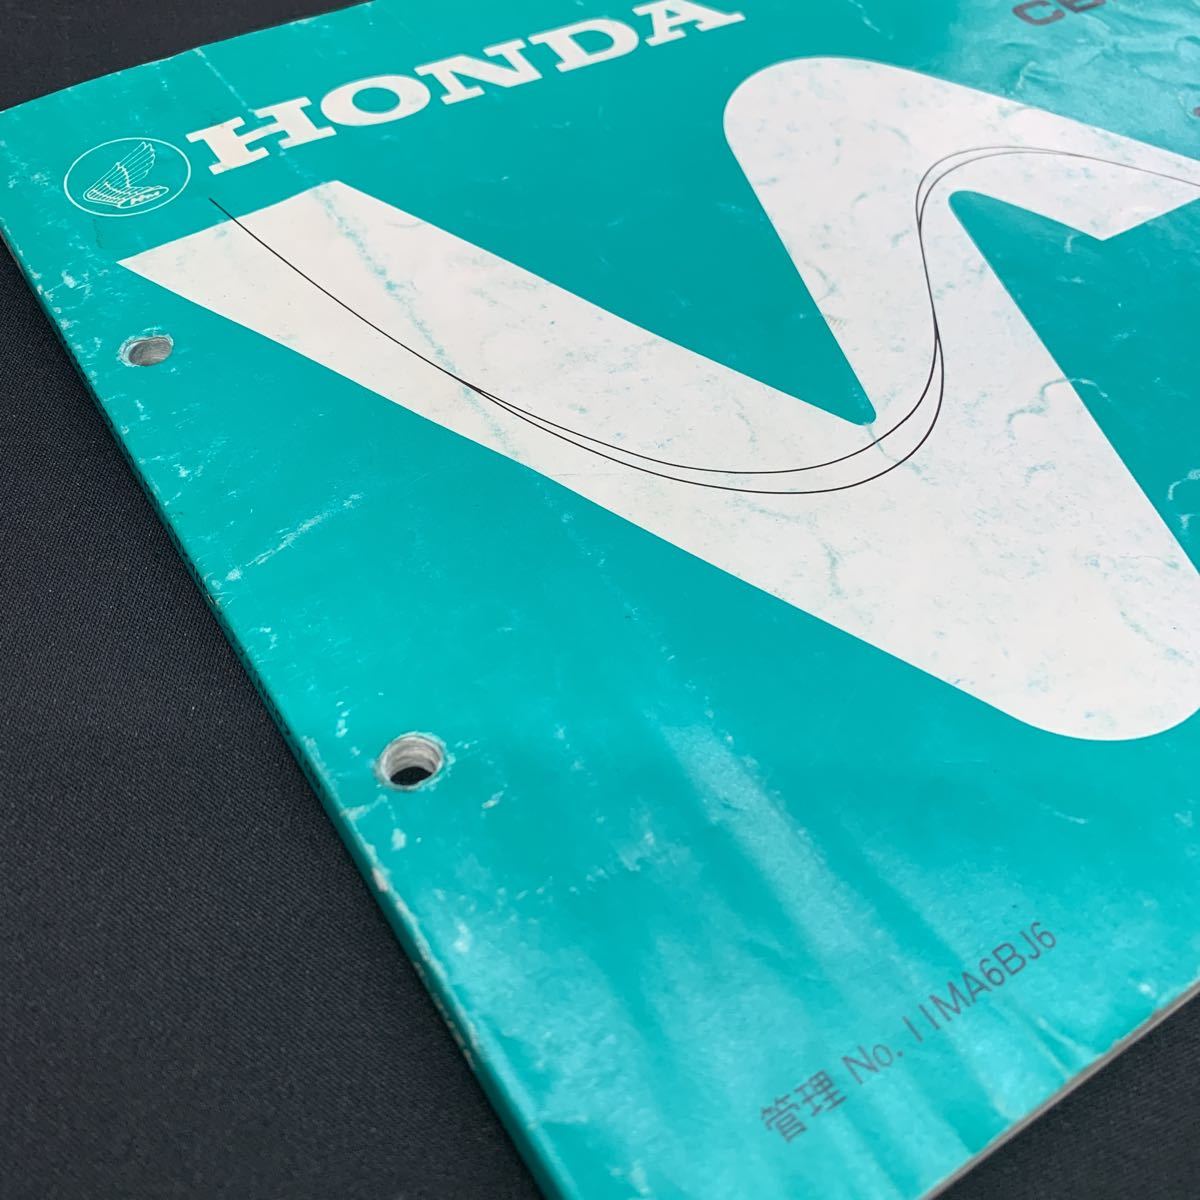 # parts list Honda HONDA 6 version CBX400F CBX550F Integra NC07 issue Showa era 63 year 4 month #